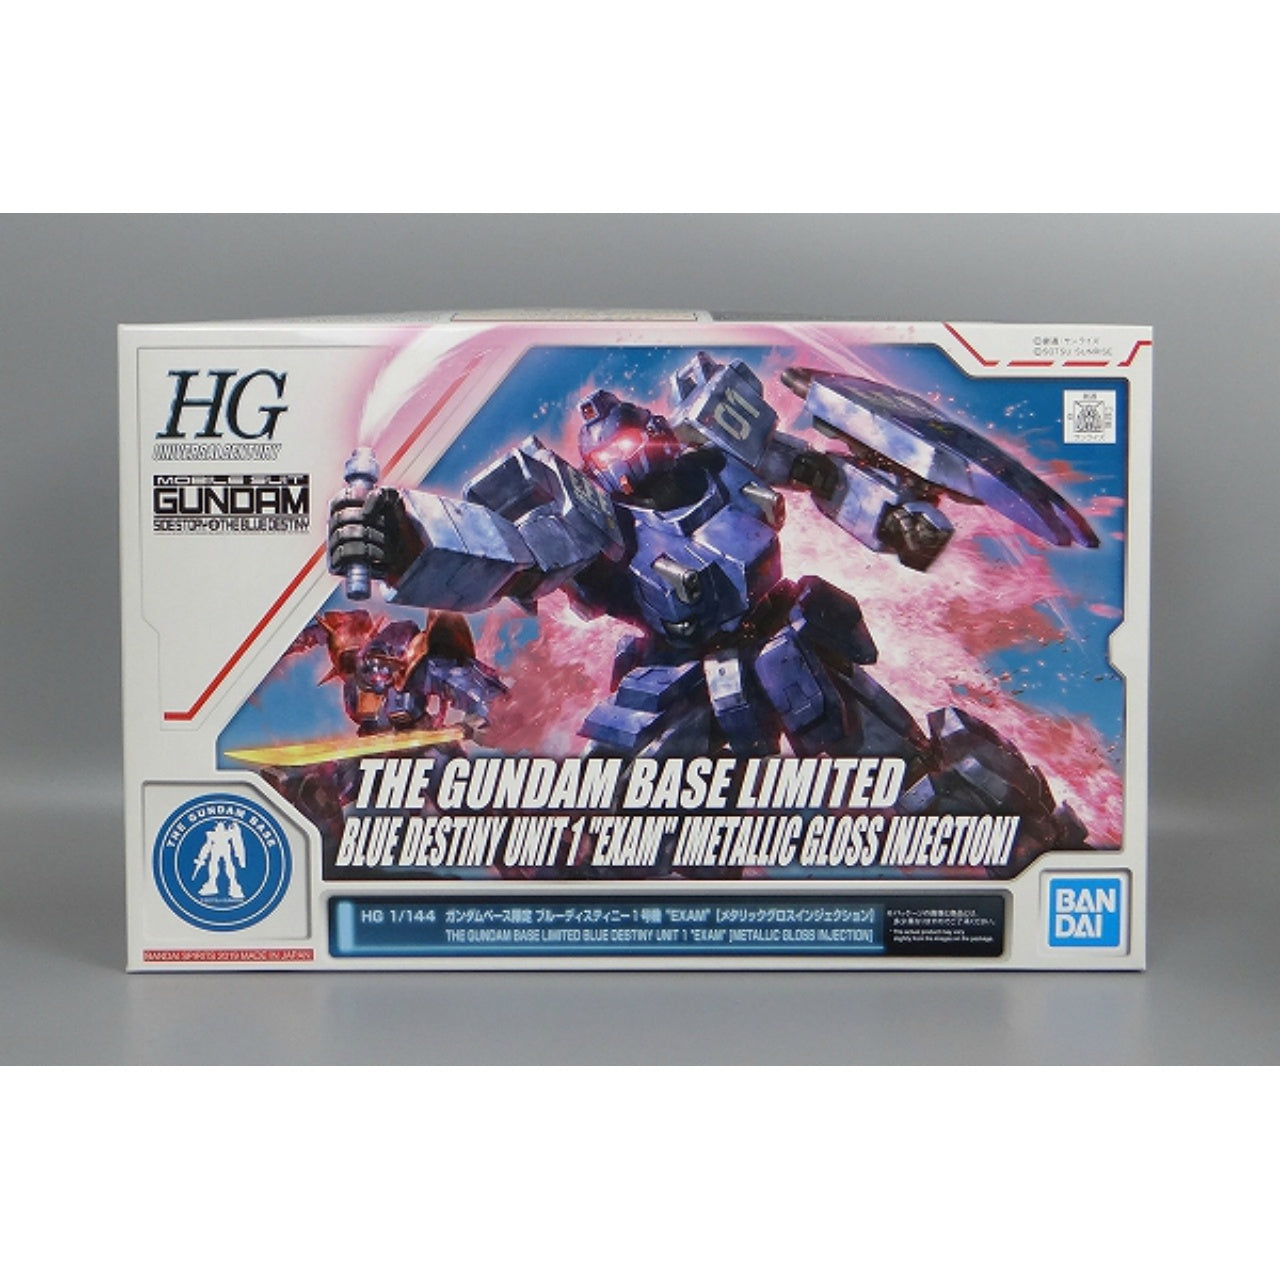 HGUC 1/144 Gundam Base Limited Blue Destiny Unit 1 Exam (Metallic Gloss Injection)